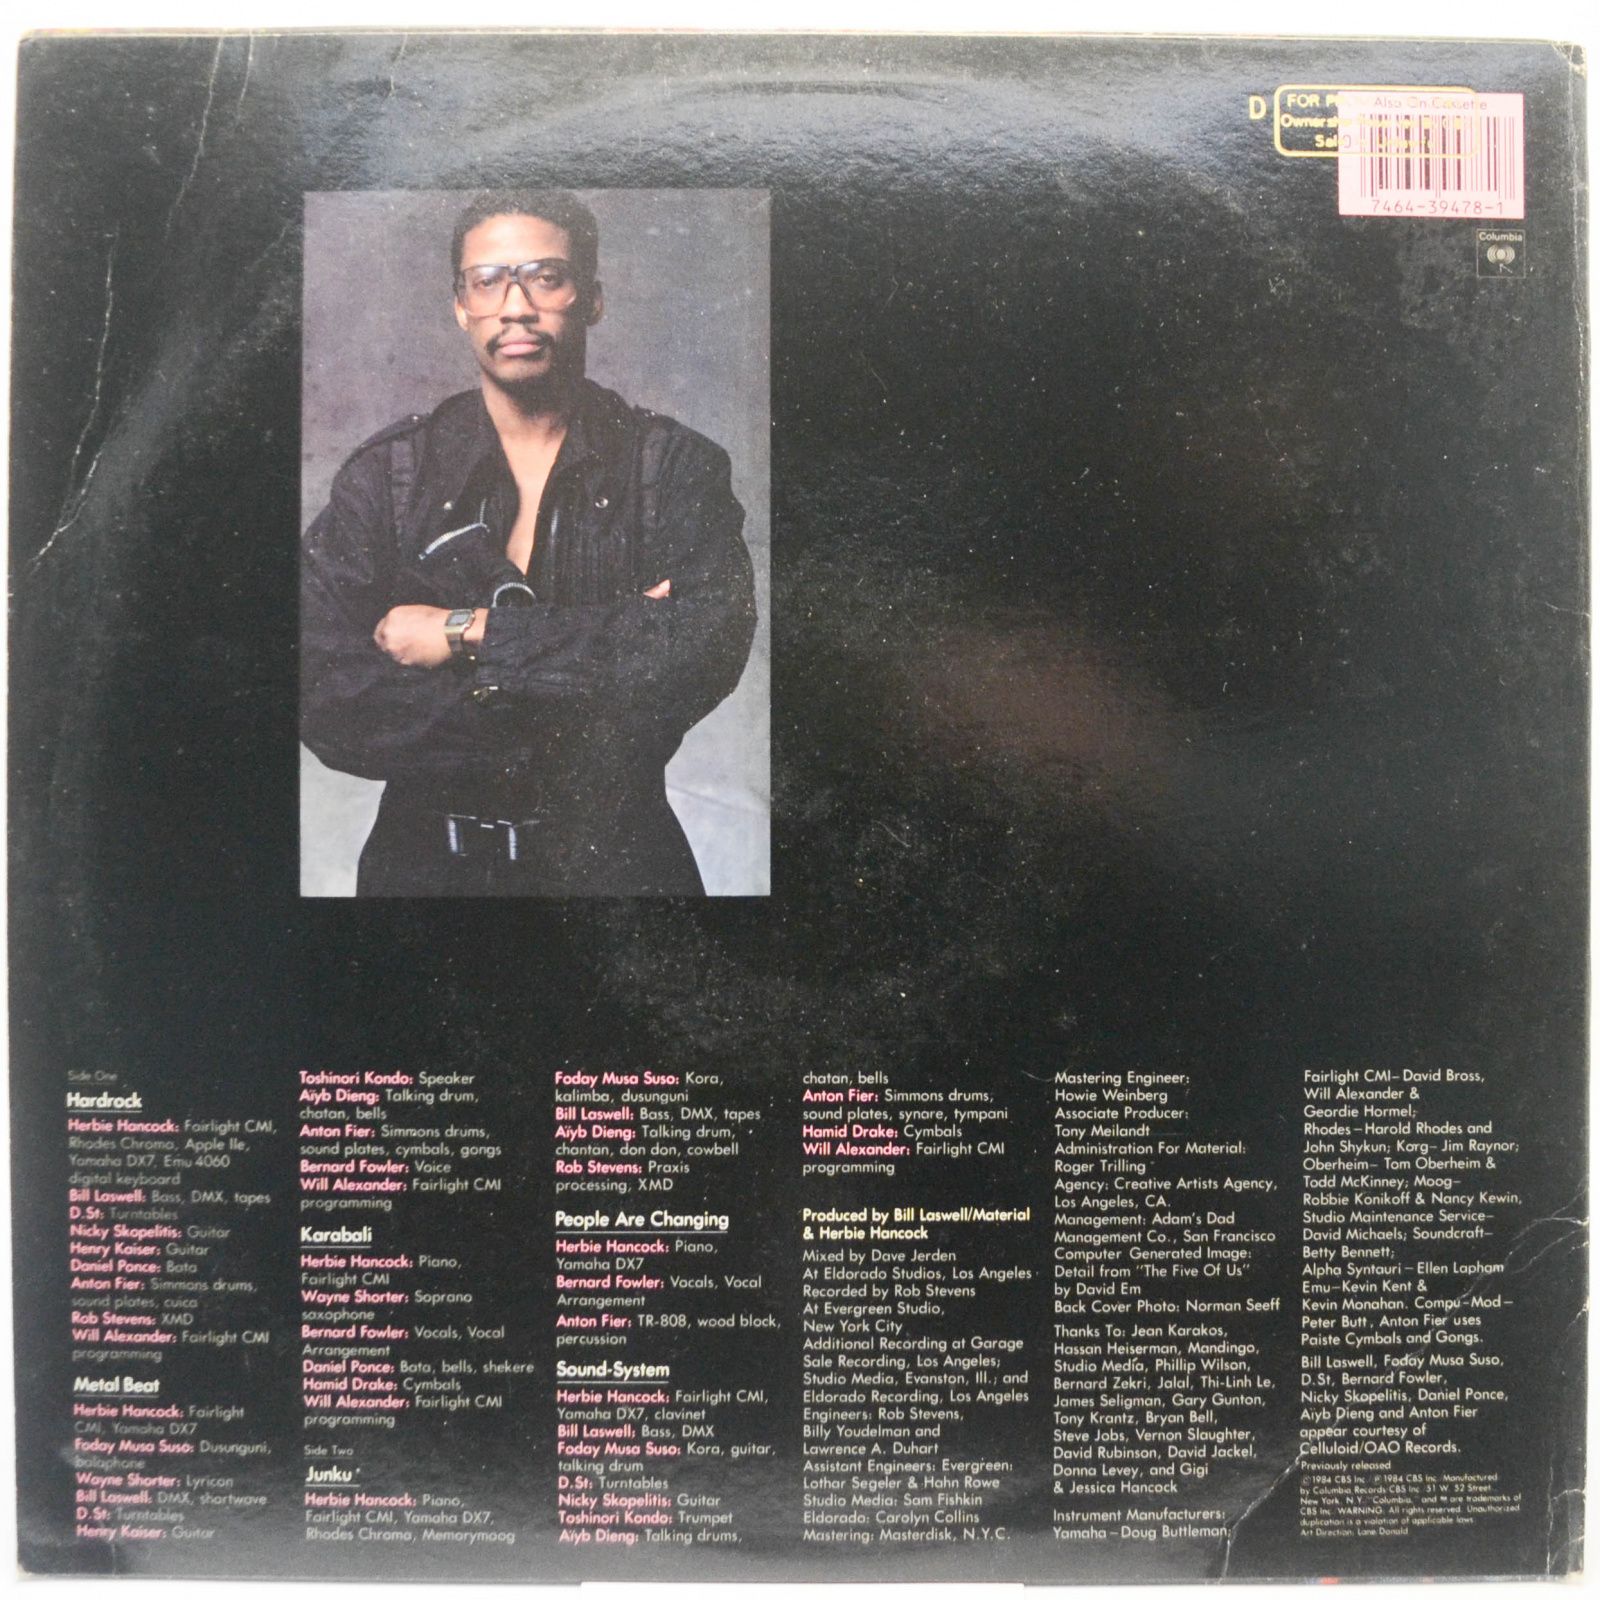 Herbie Hancock — Sound-System (1-st, USA), 1984